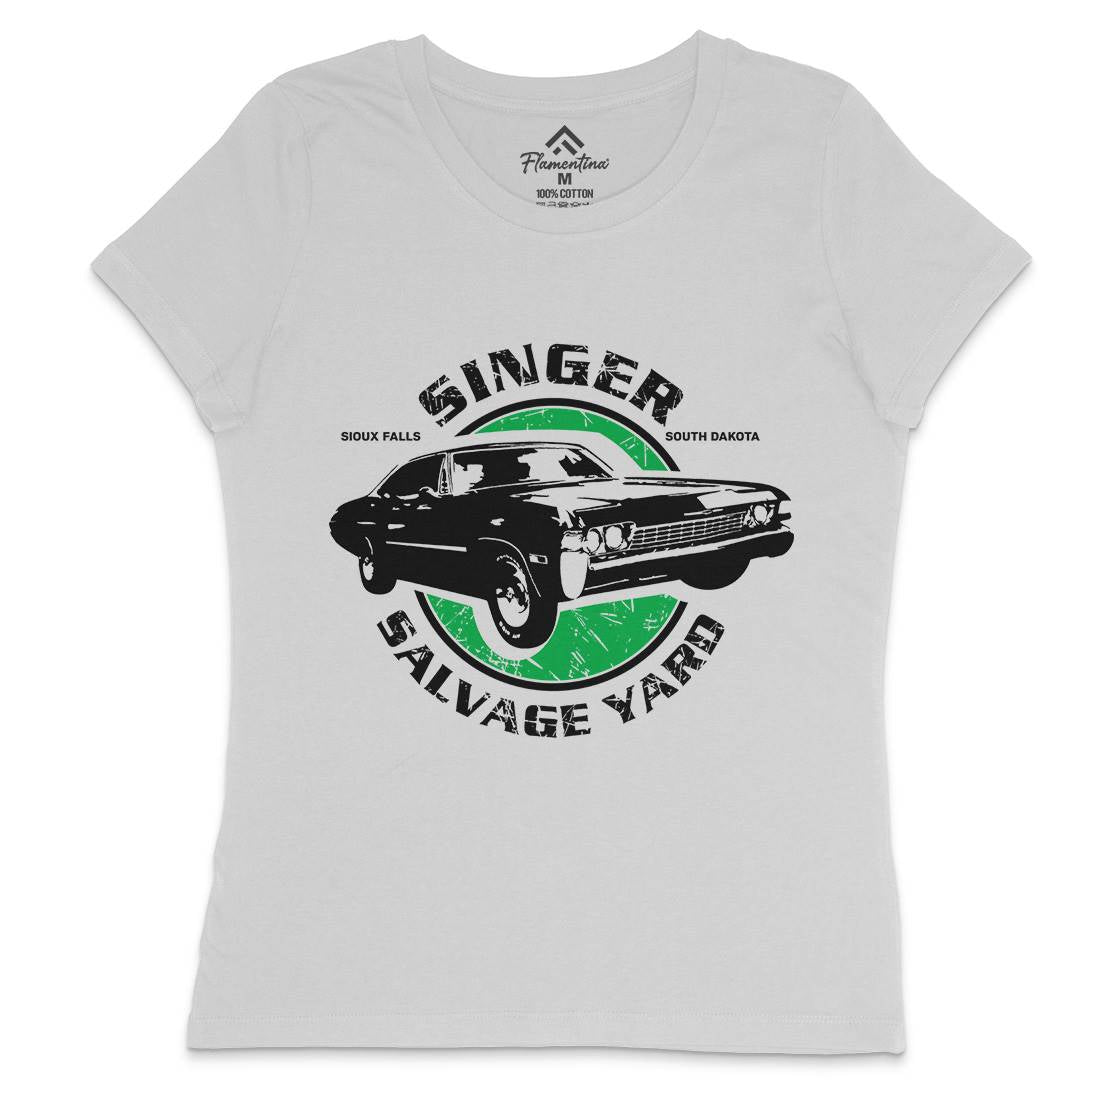 Singer Salvage Yard Womens Crew Neck T-Shirt Cars D377